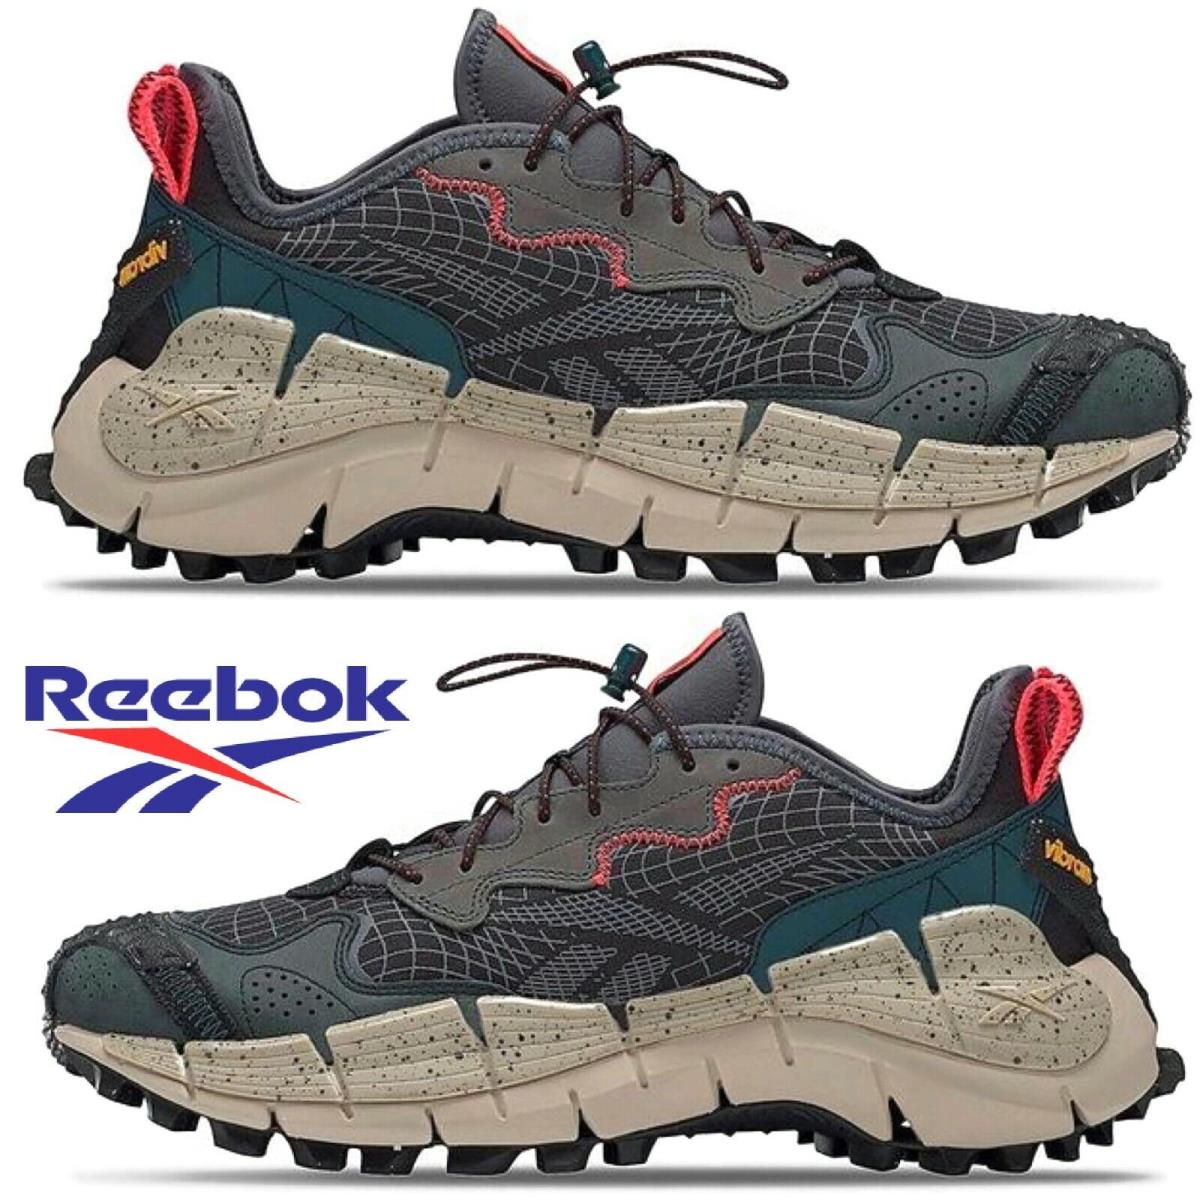 Reebok Zig Kinetica II Edge Men`s Sneakers Running Training Shoes Casual Sport